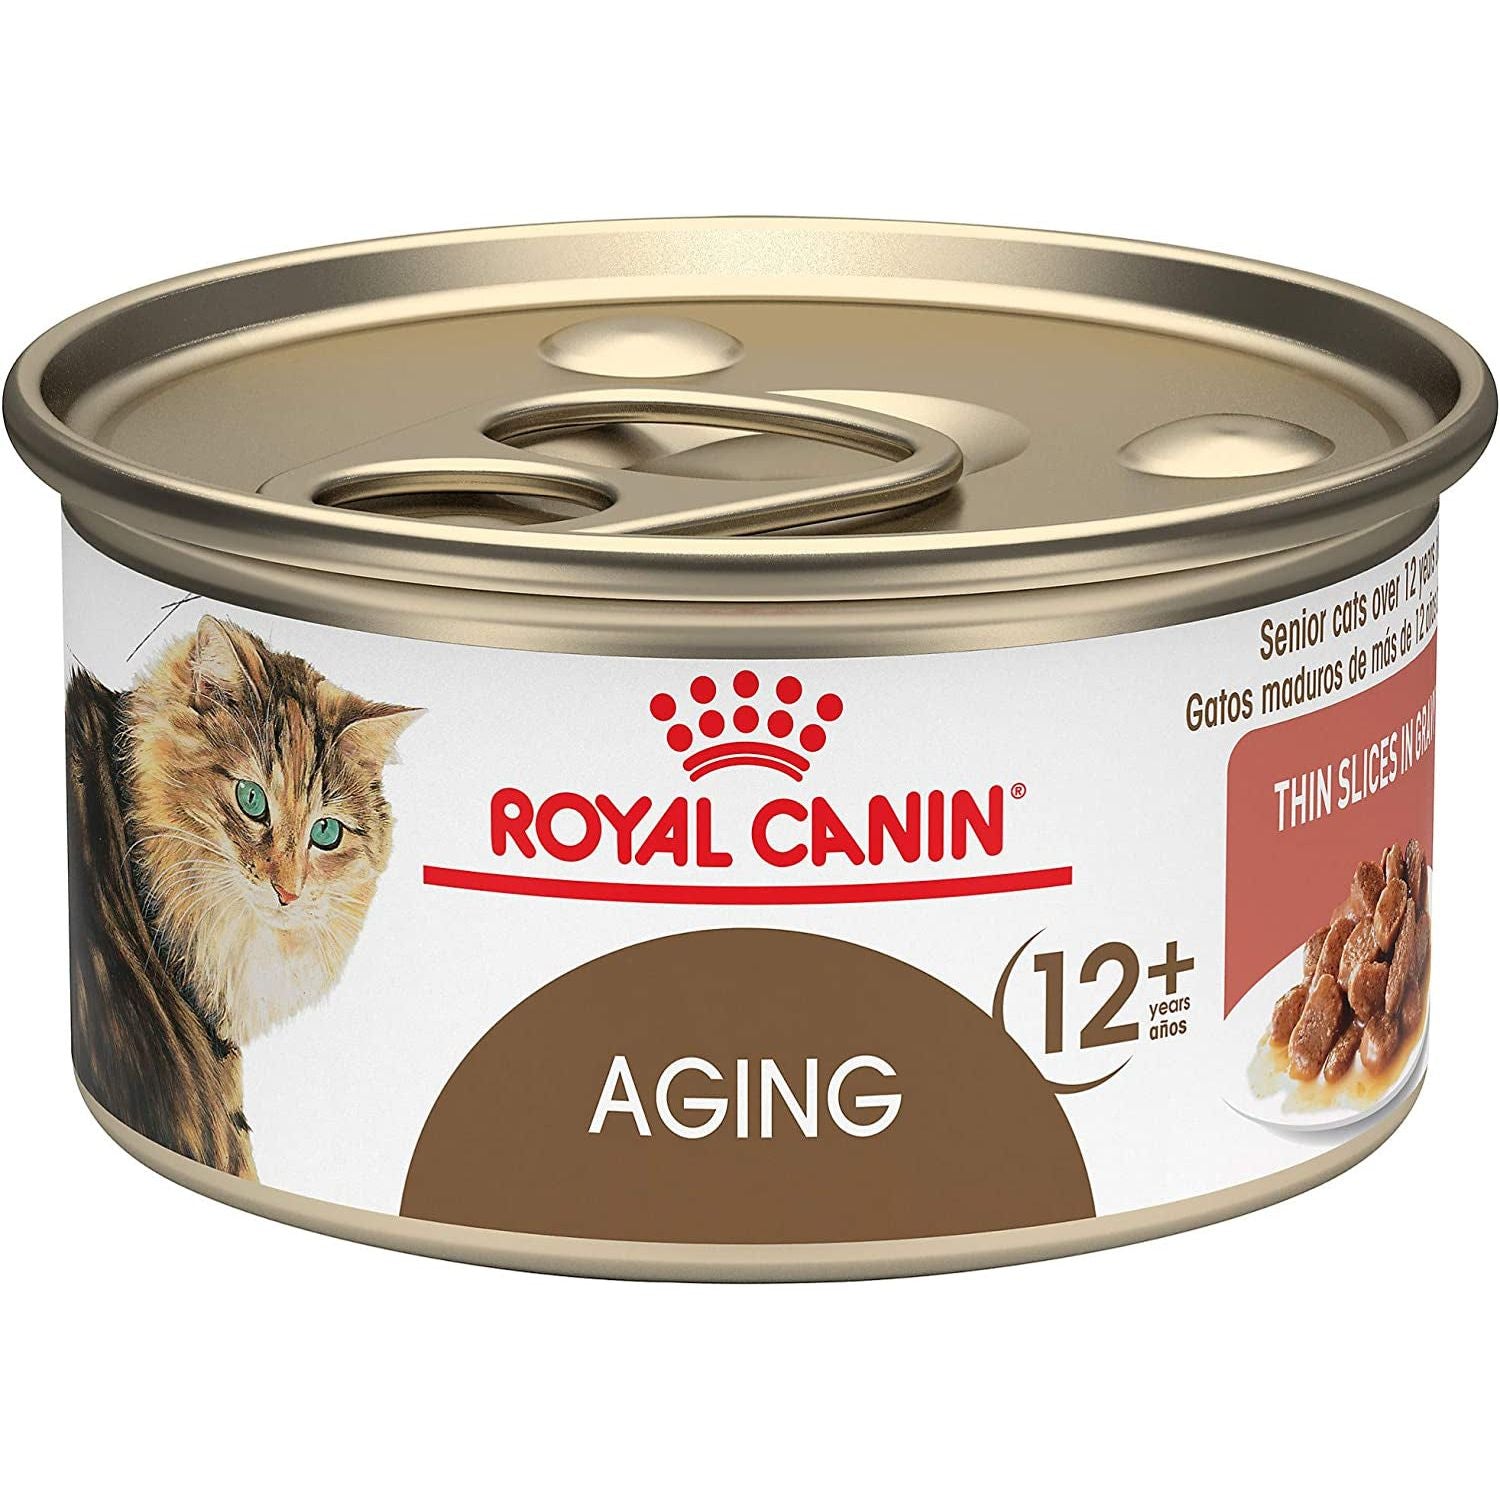 Feline Health Nutrition Aging 12+ Wet Cat Food